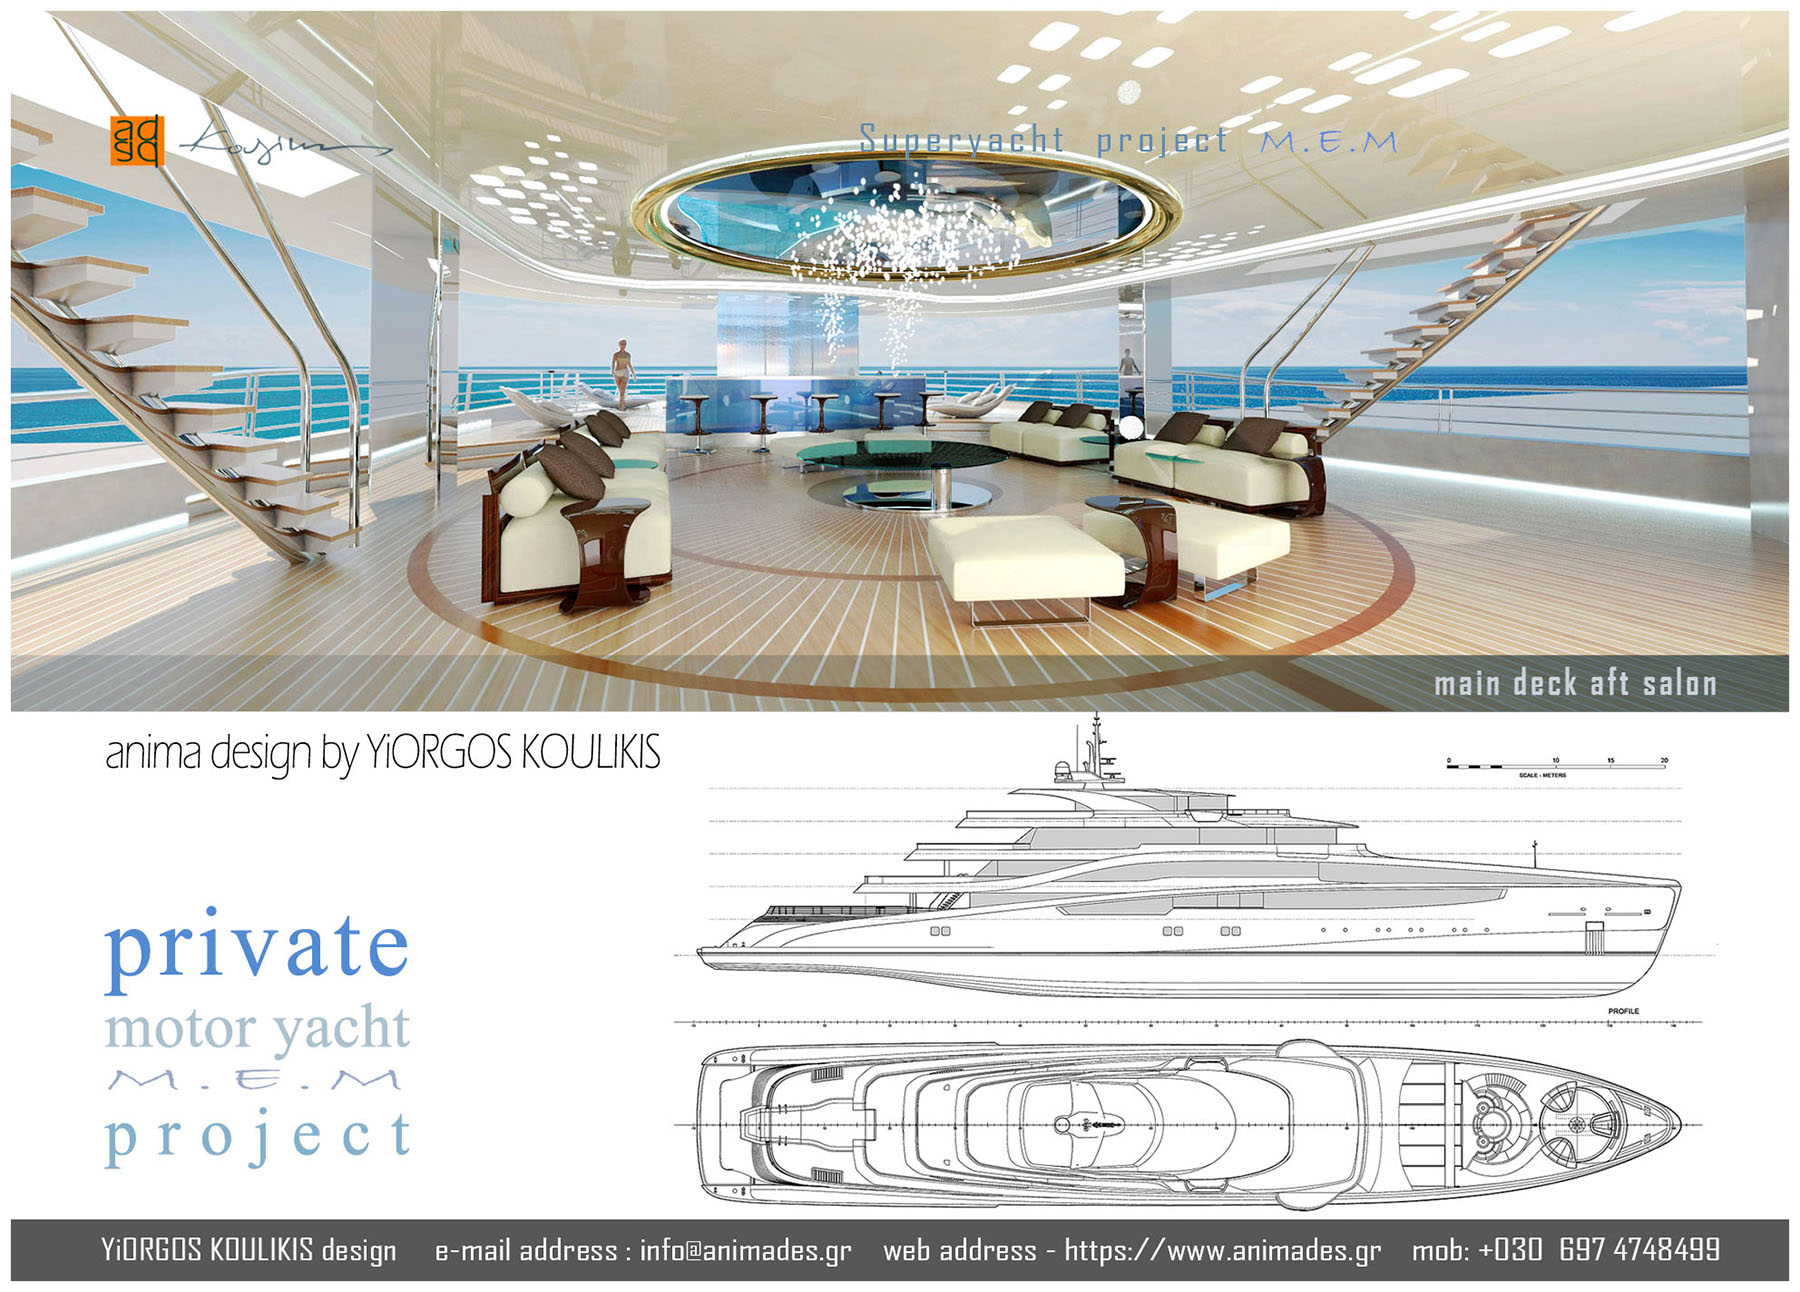 Project MEM exterior areas — Yacht Charter & Superyacht News